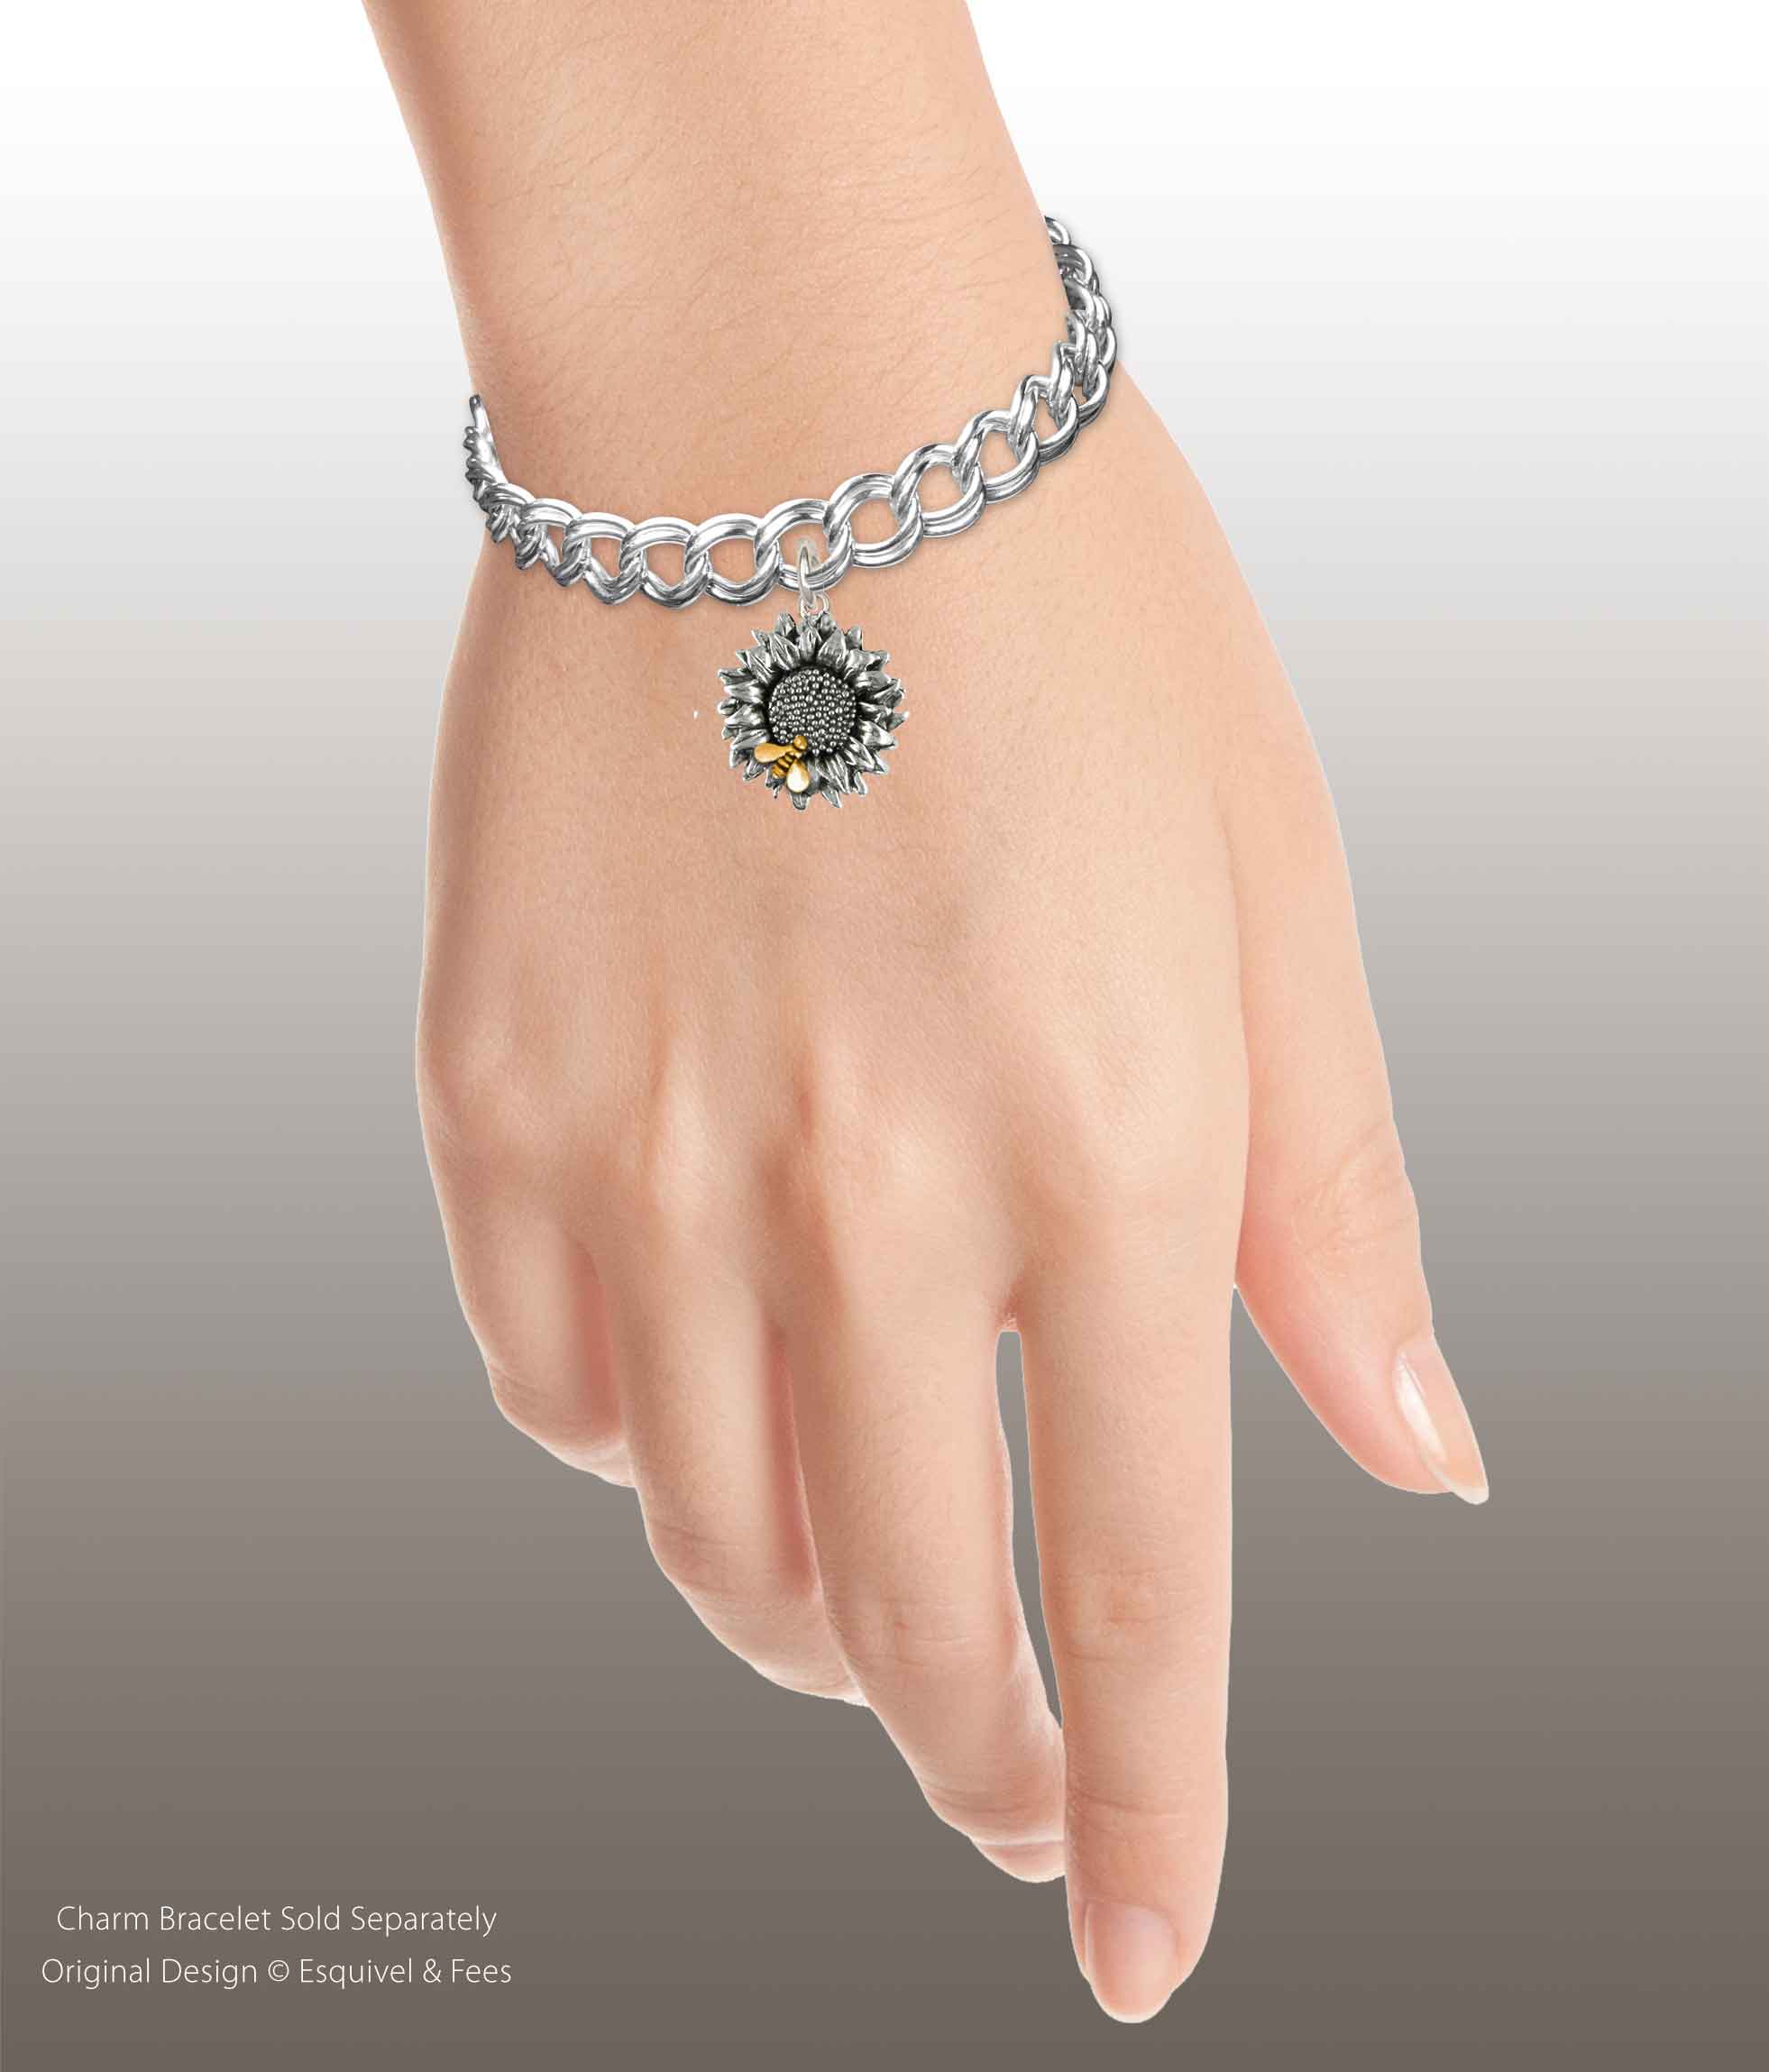 🐝 silver beads mini Bee charm stack cute bracelet friendship family gift  UK 🐝 | eBay